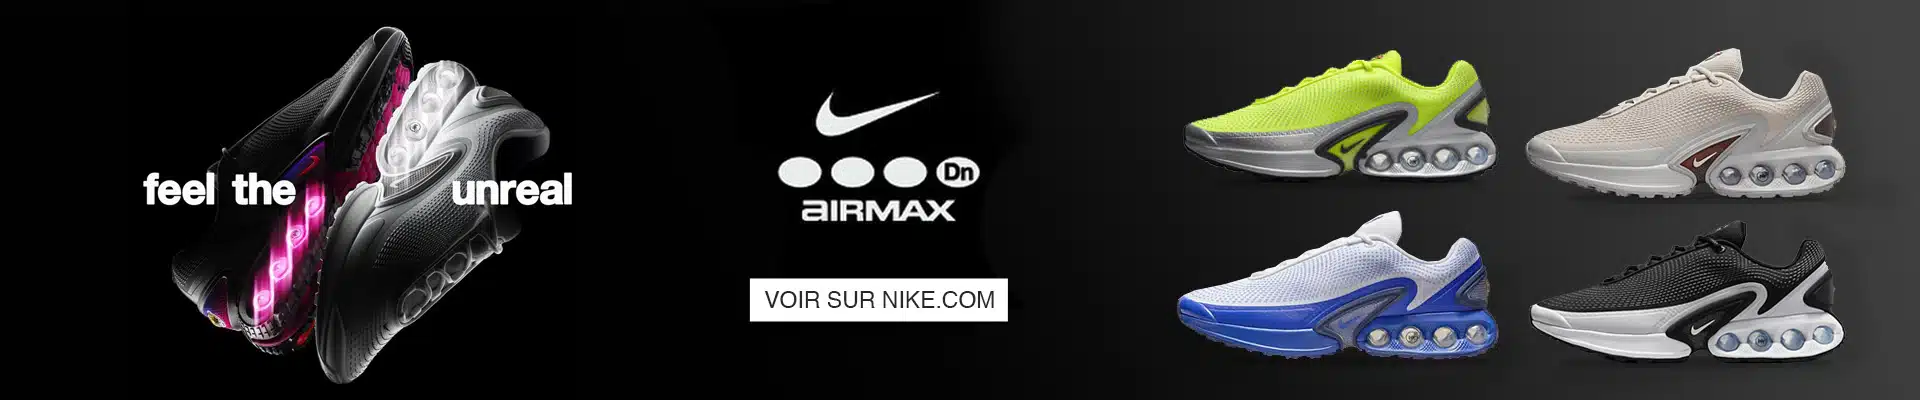 Nike coming Air Max Dn